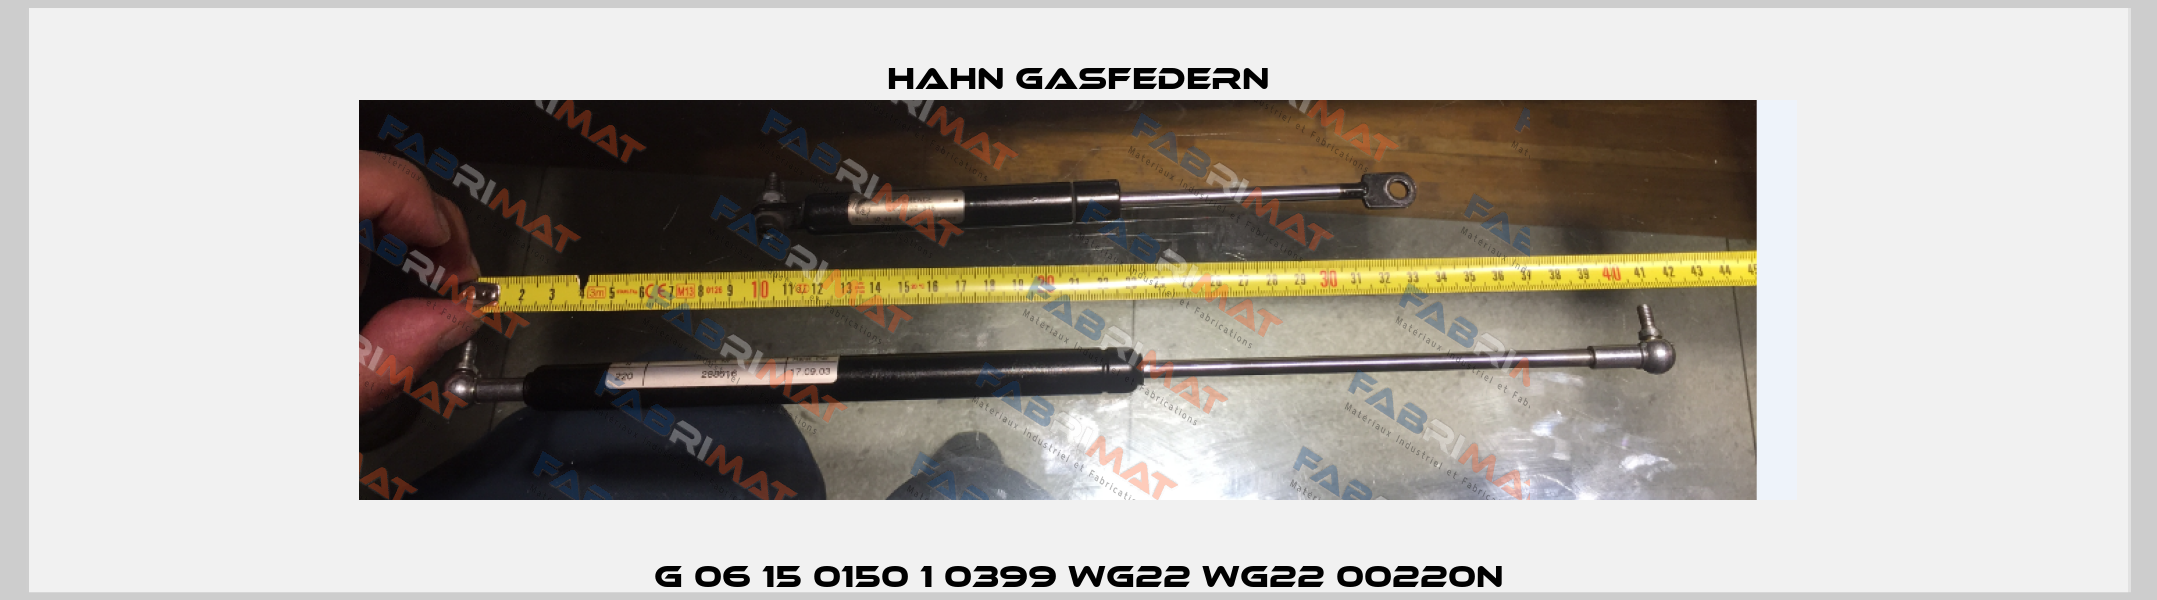 G 06 15 0150 1 0399 WG22 WG22 00220N Hahn Gasfedern